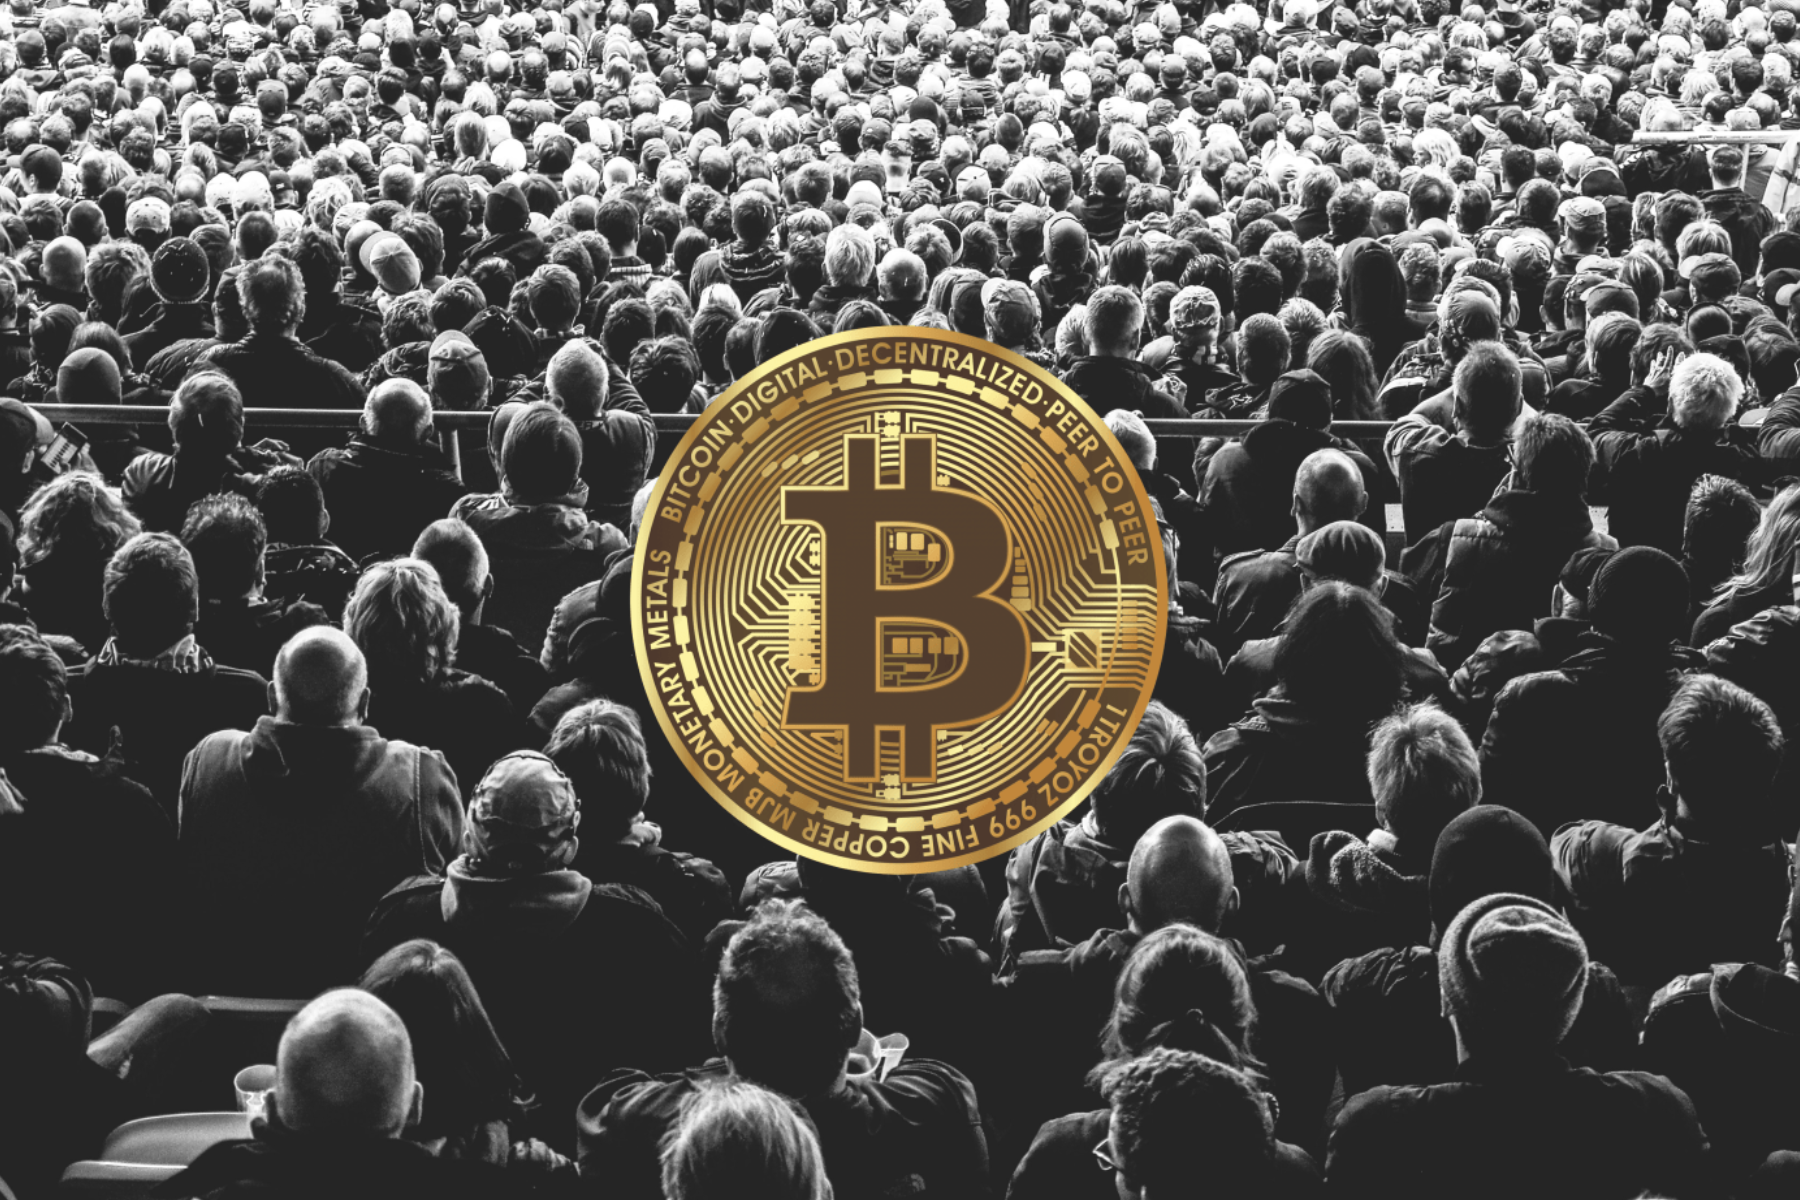 A mob displaying the Bitcoin logo